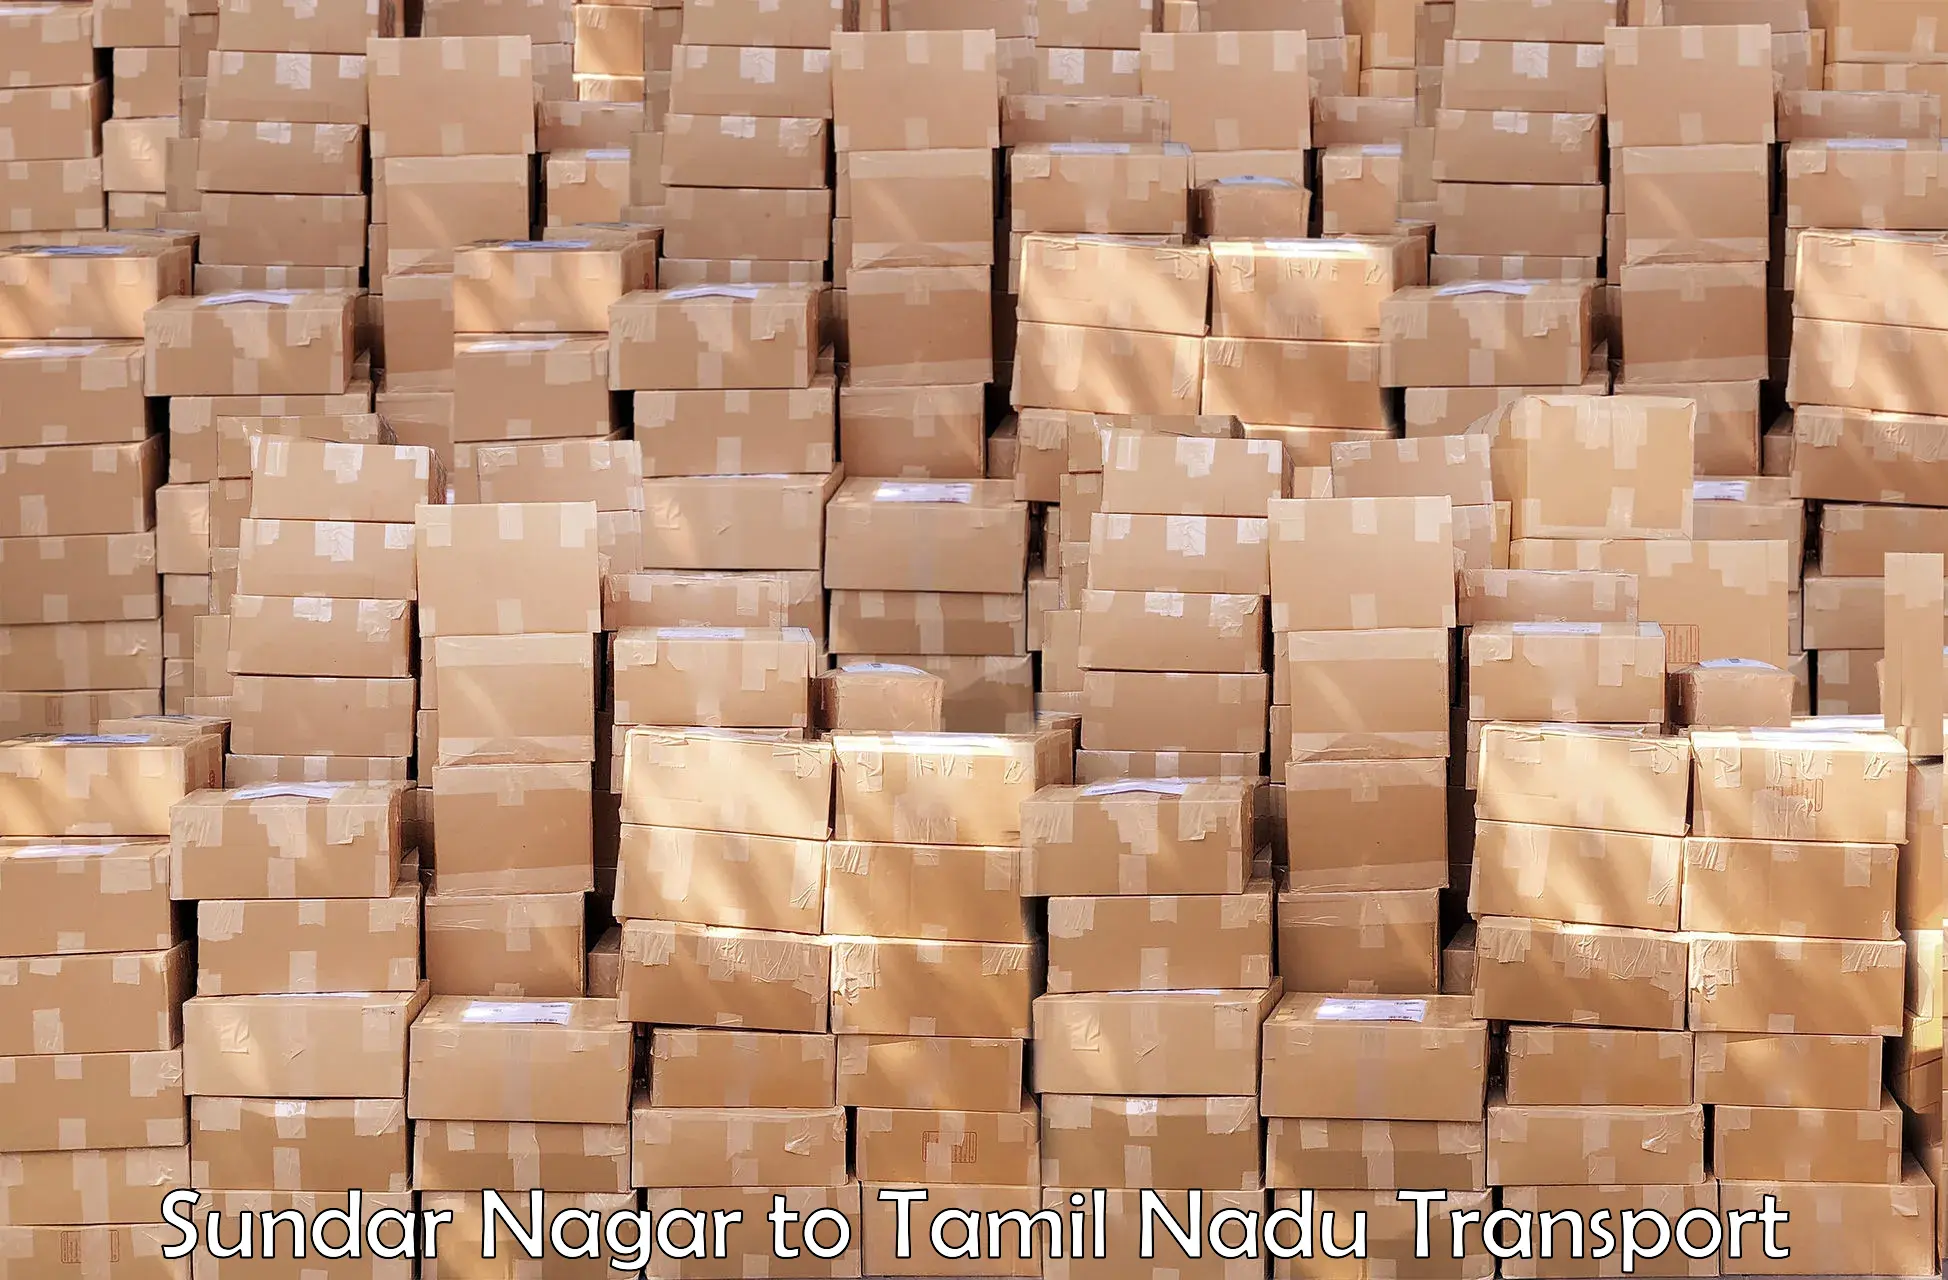 Daily parcel service transport in Sundar Nagar to Eraiyur